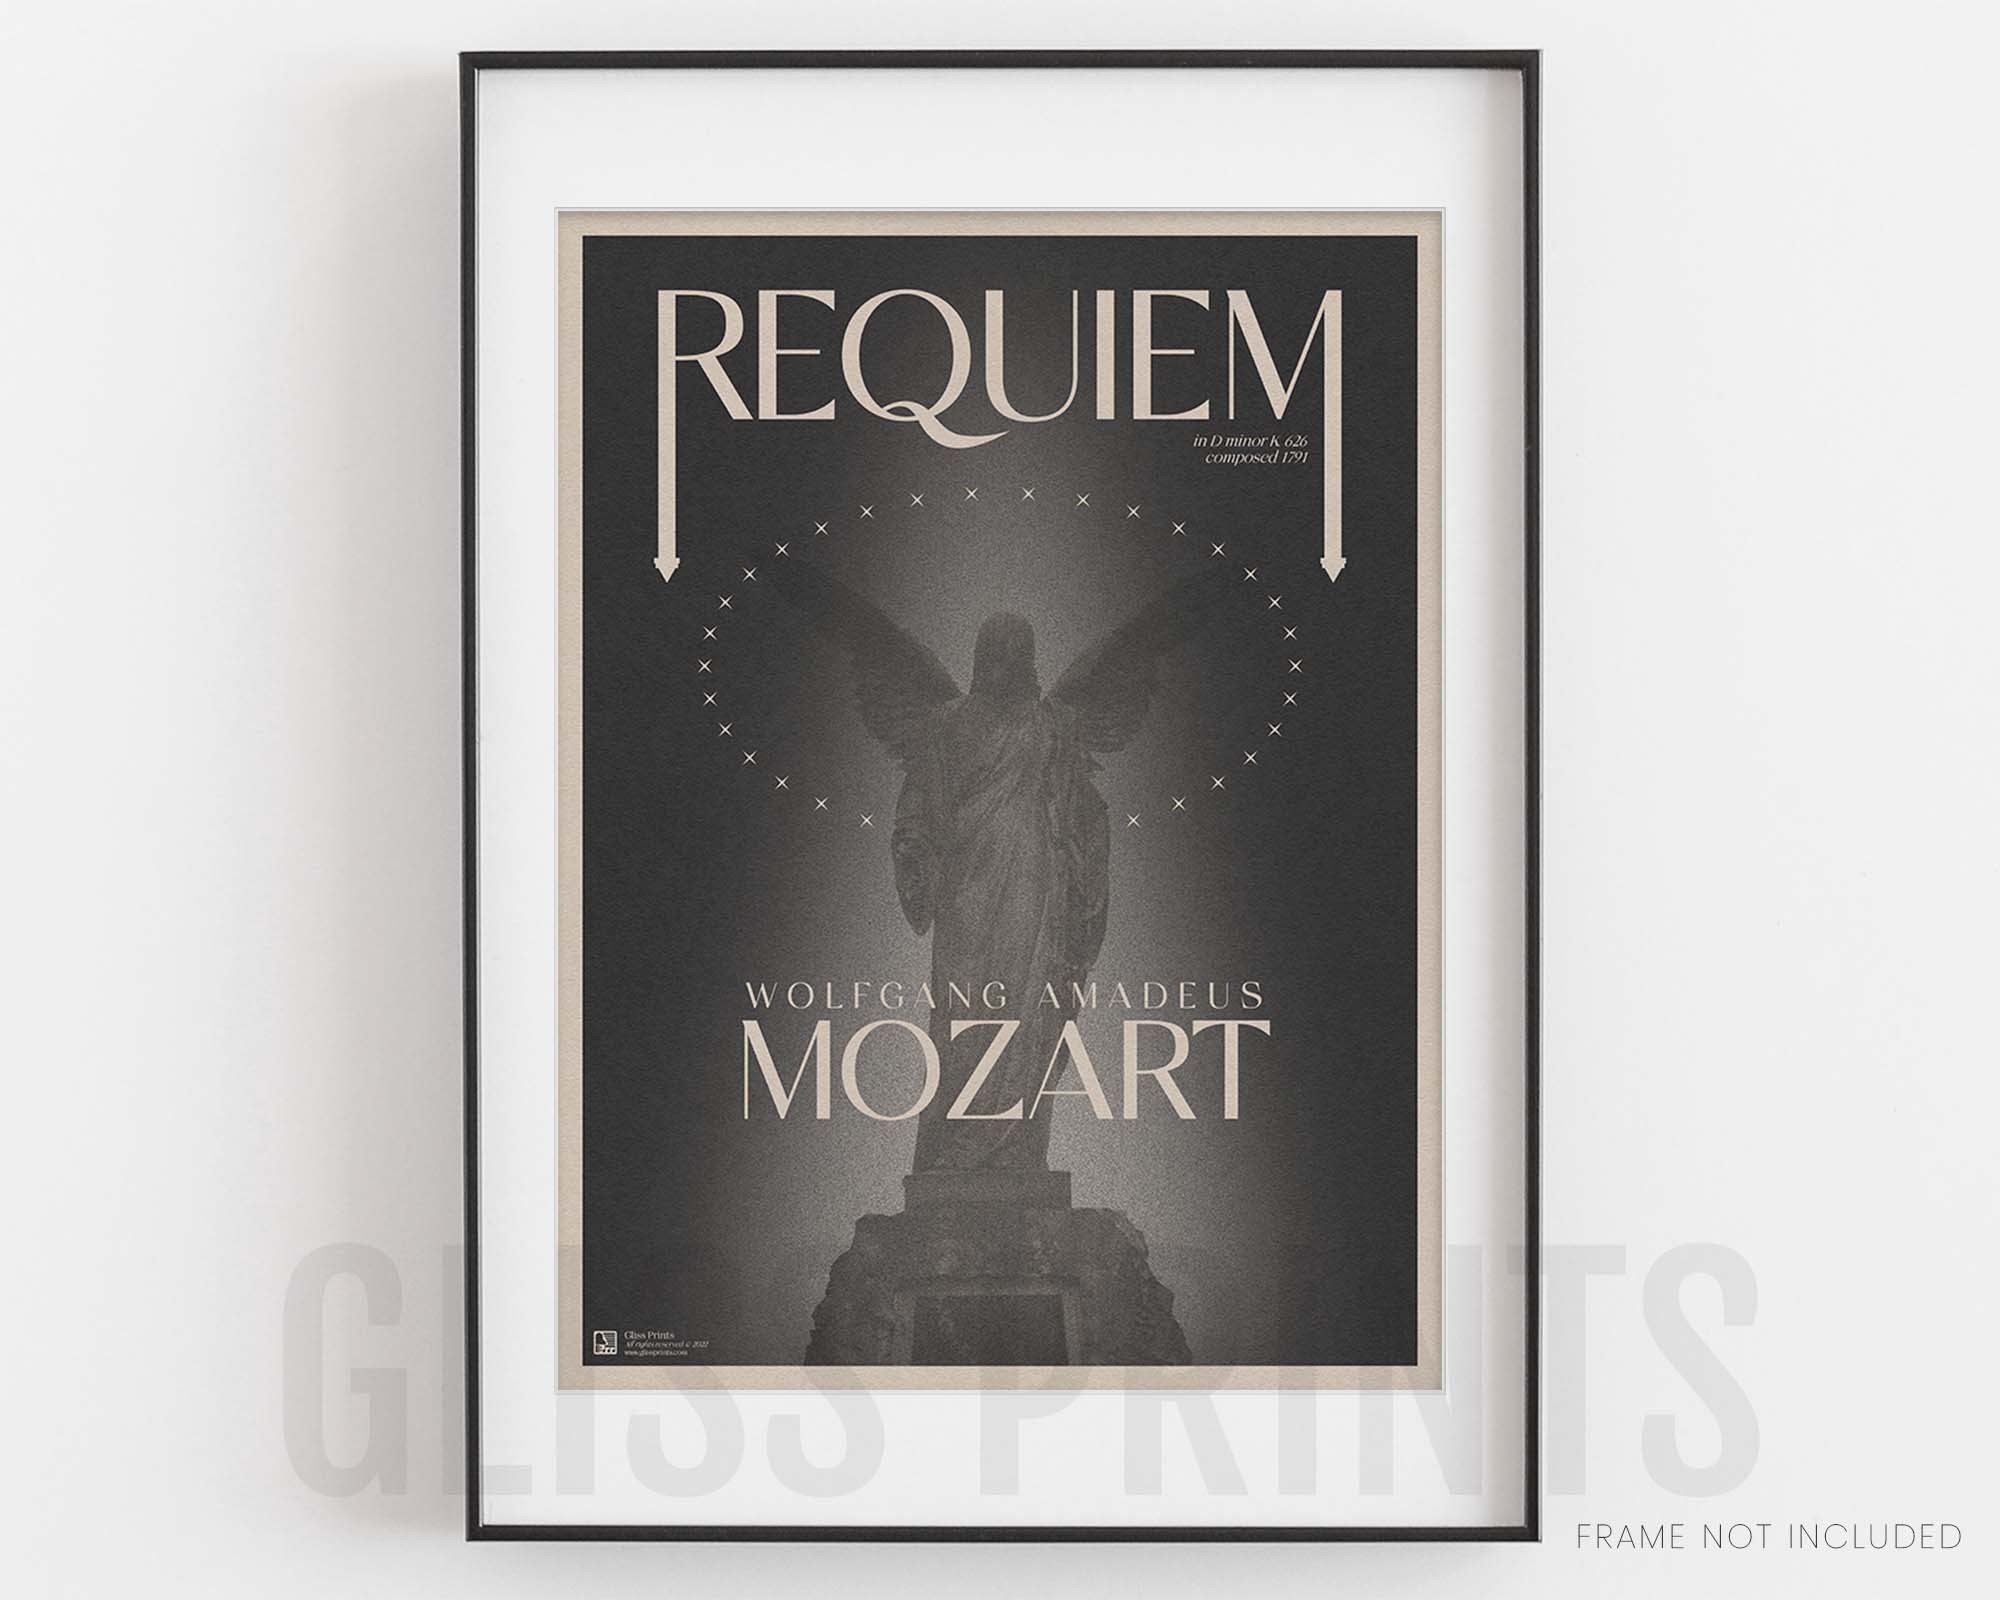 Wolfgang Amadeus Mozart Requiem Concert Print